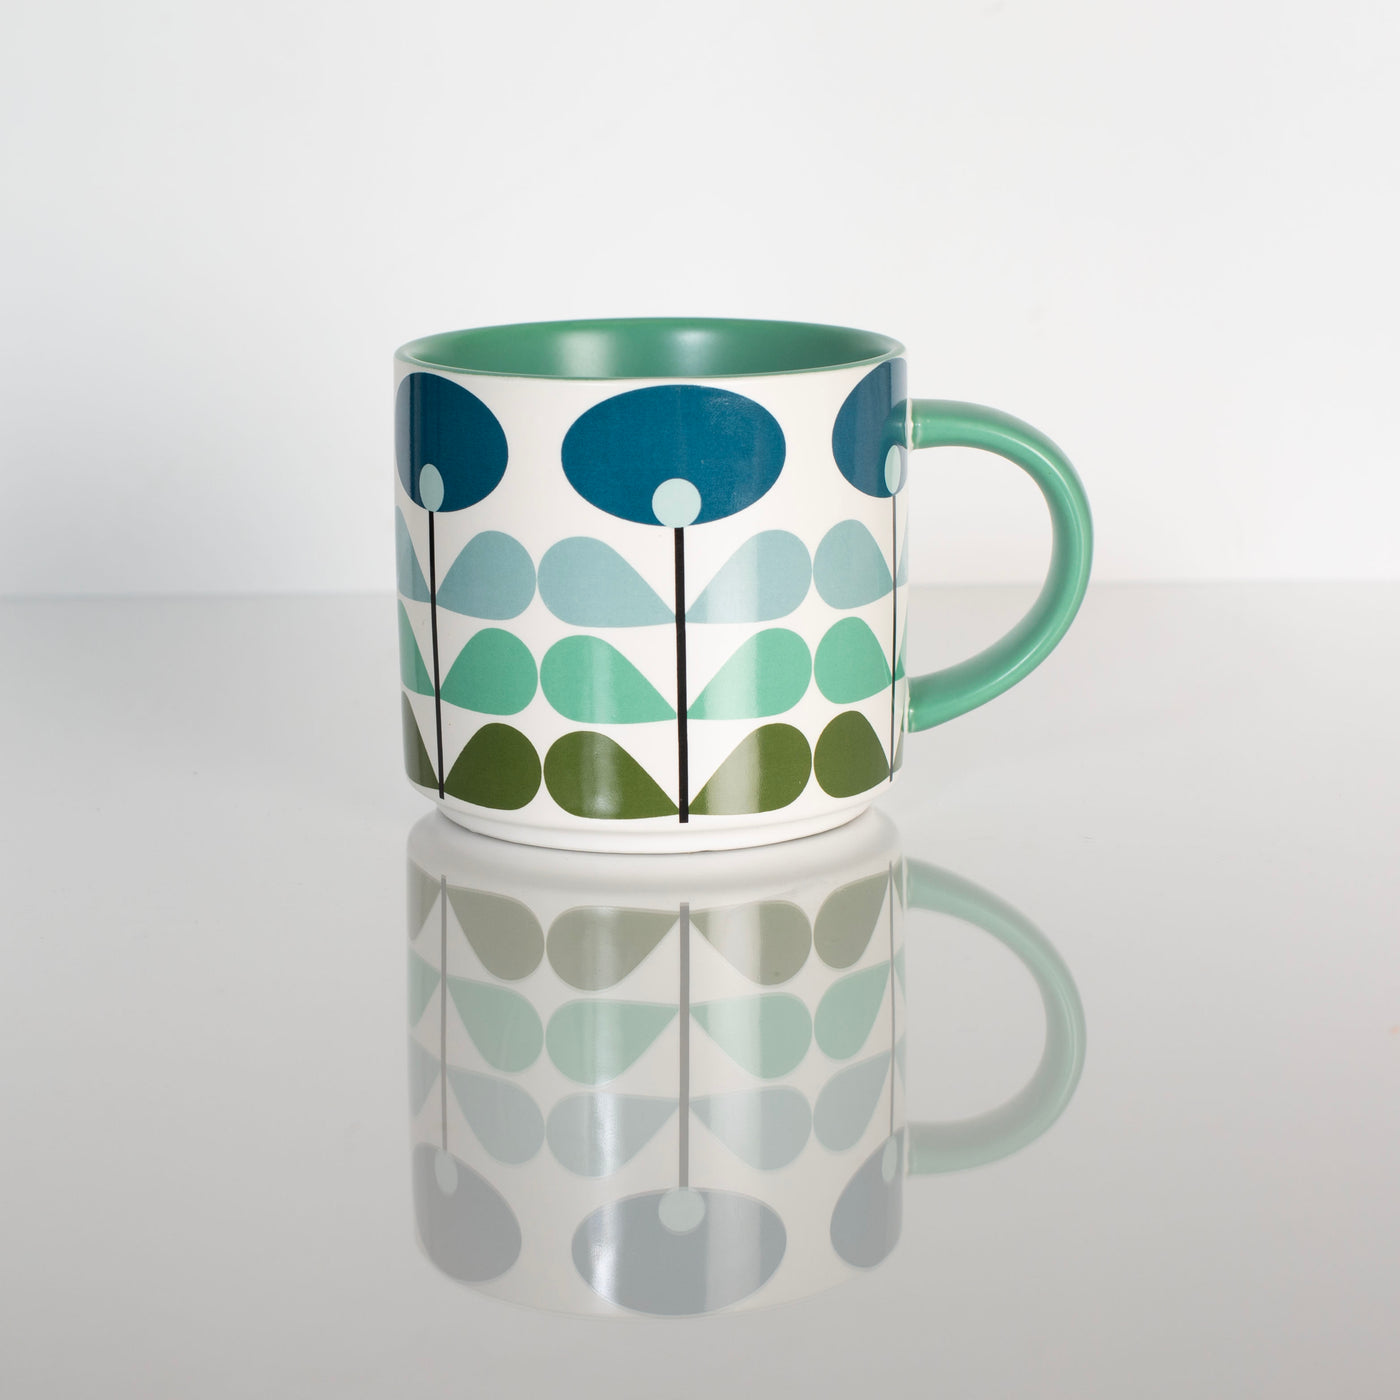 15oz mid century modern blue flower stackable ceramic mug. Matte finish coffee mug